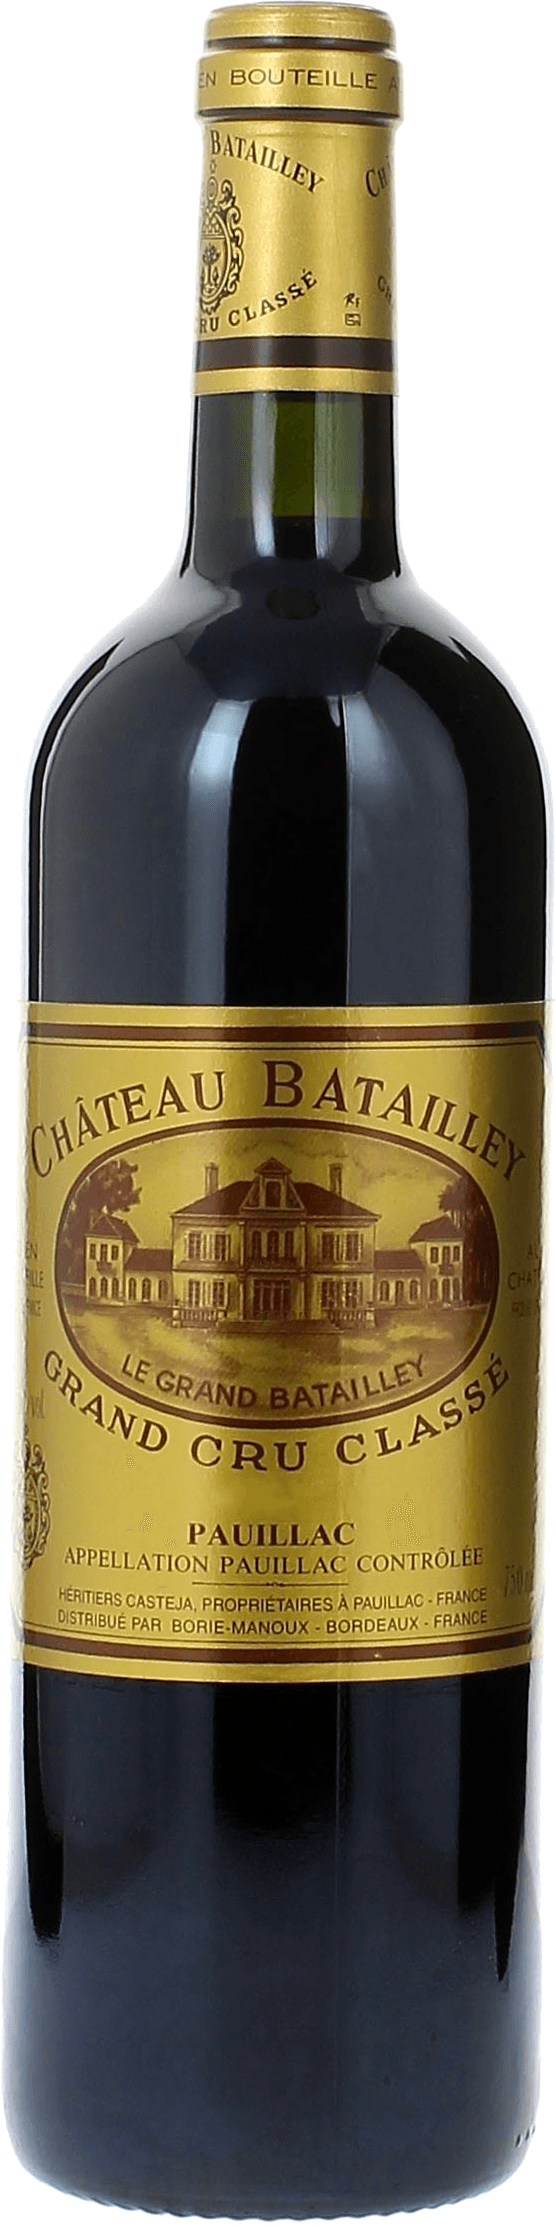 Batailley 1994 5 me Grand cru class Pauillac, Bordeaux rouge